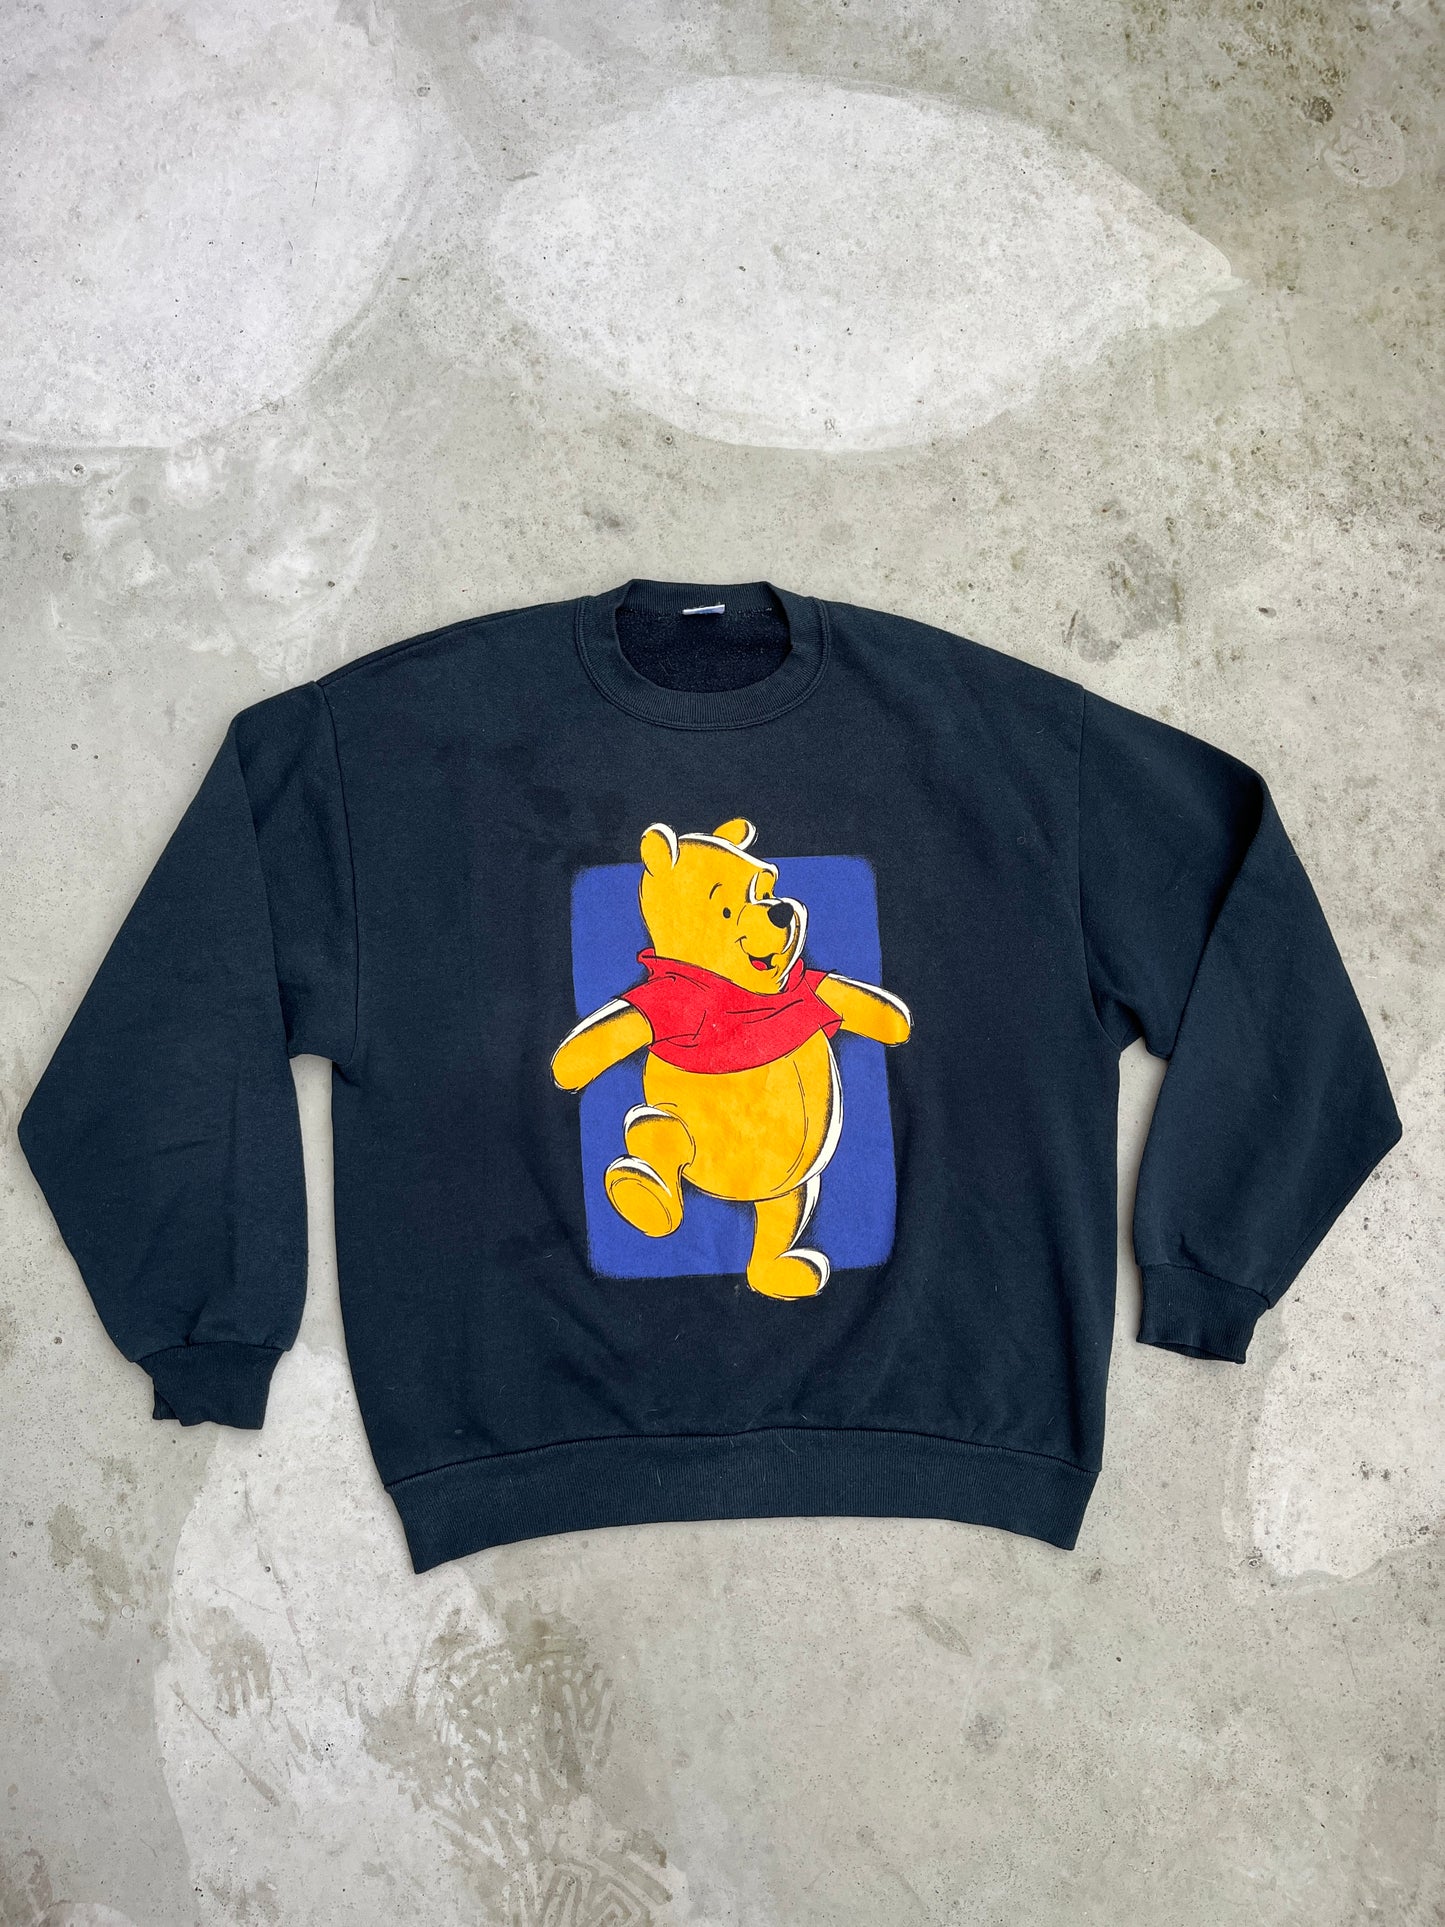 Vintage Disney Sweatshirt - 1990's